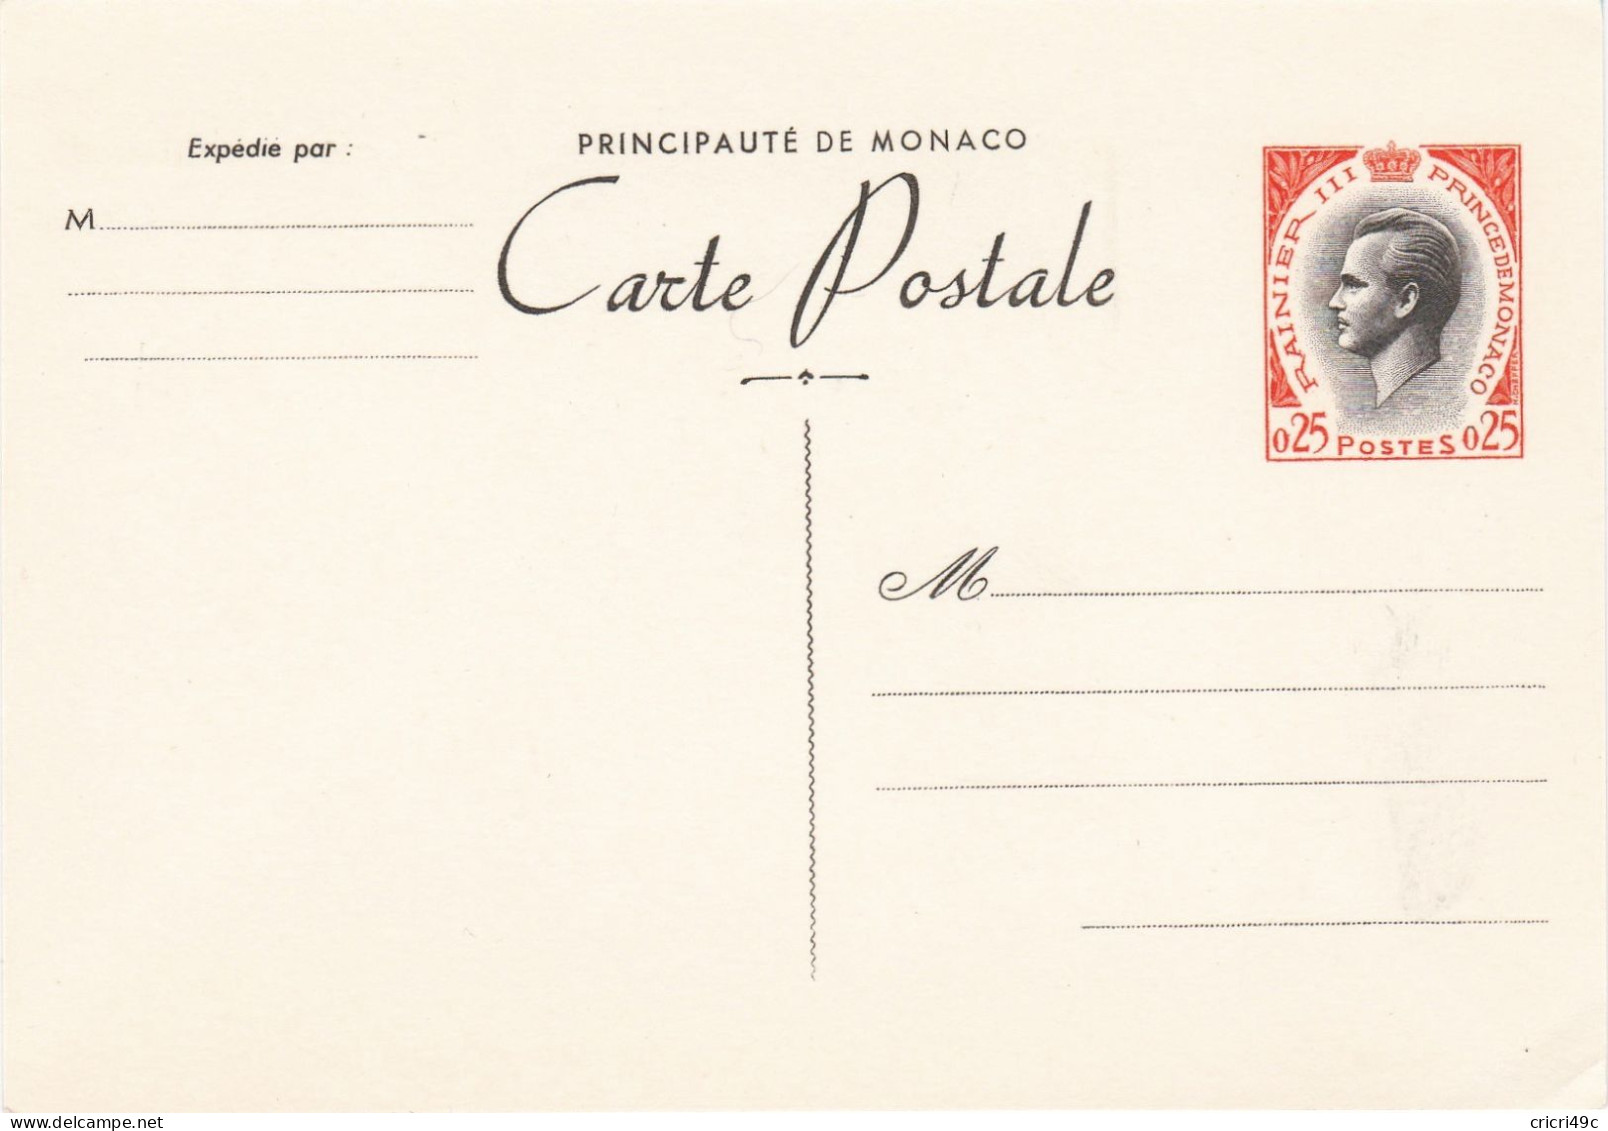 Monaco Entier Postal N° Y&T 35  1965  Carte Postale - Entiers Postaux